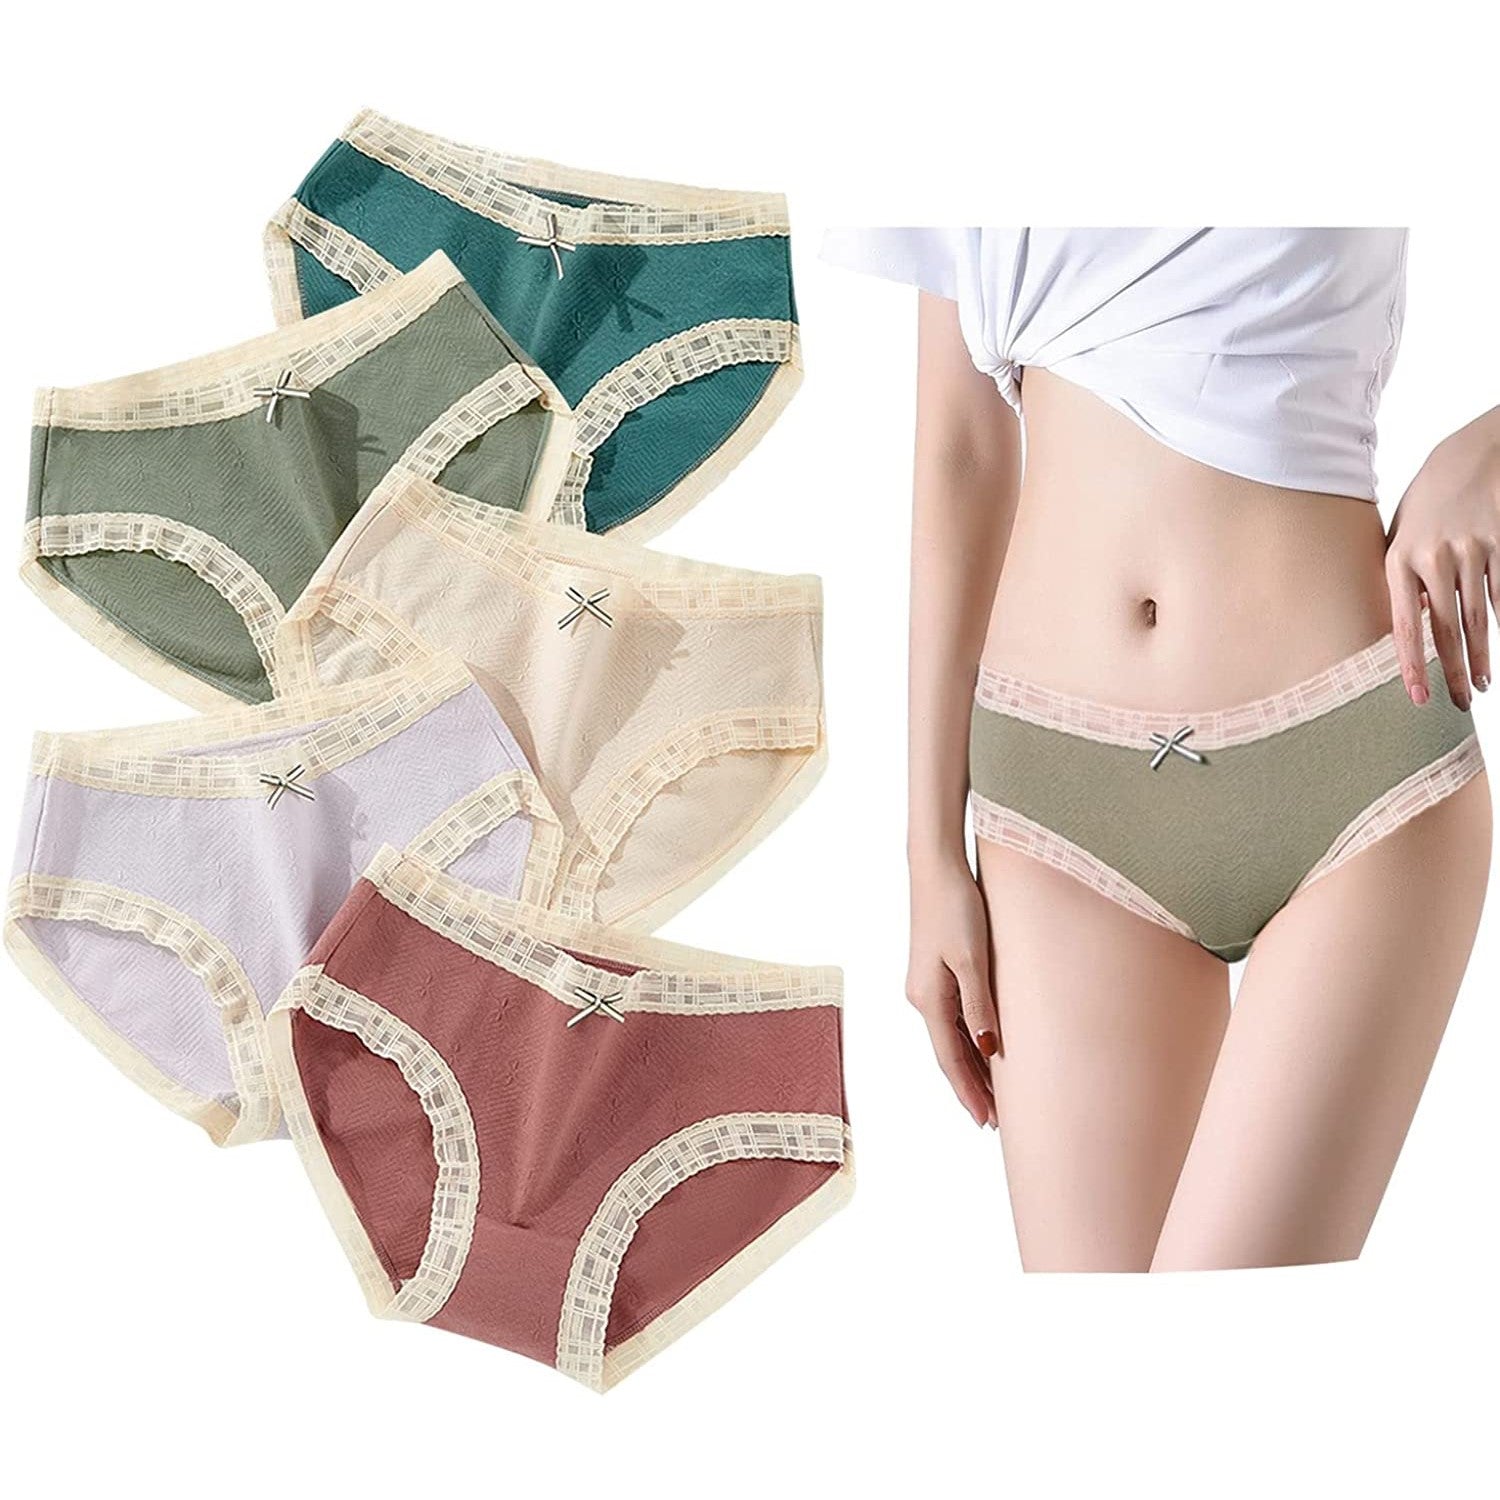 Cotton Panties - Buy Pure Cotton Underwear for Ladies Online